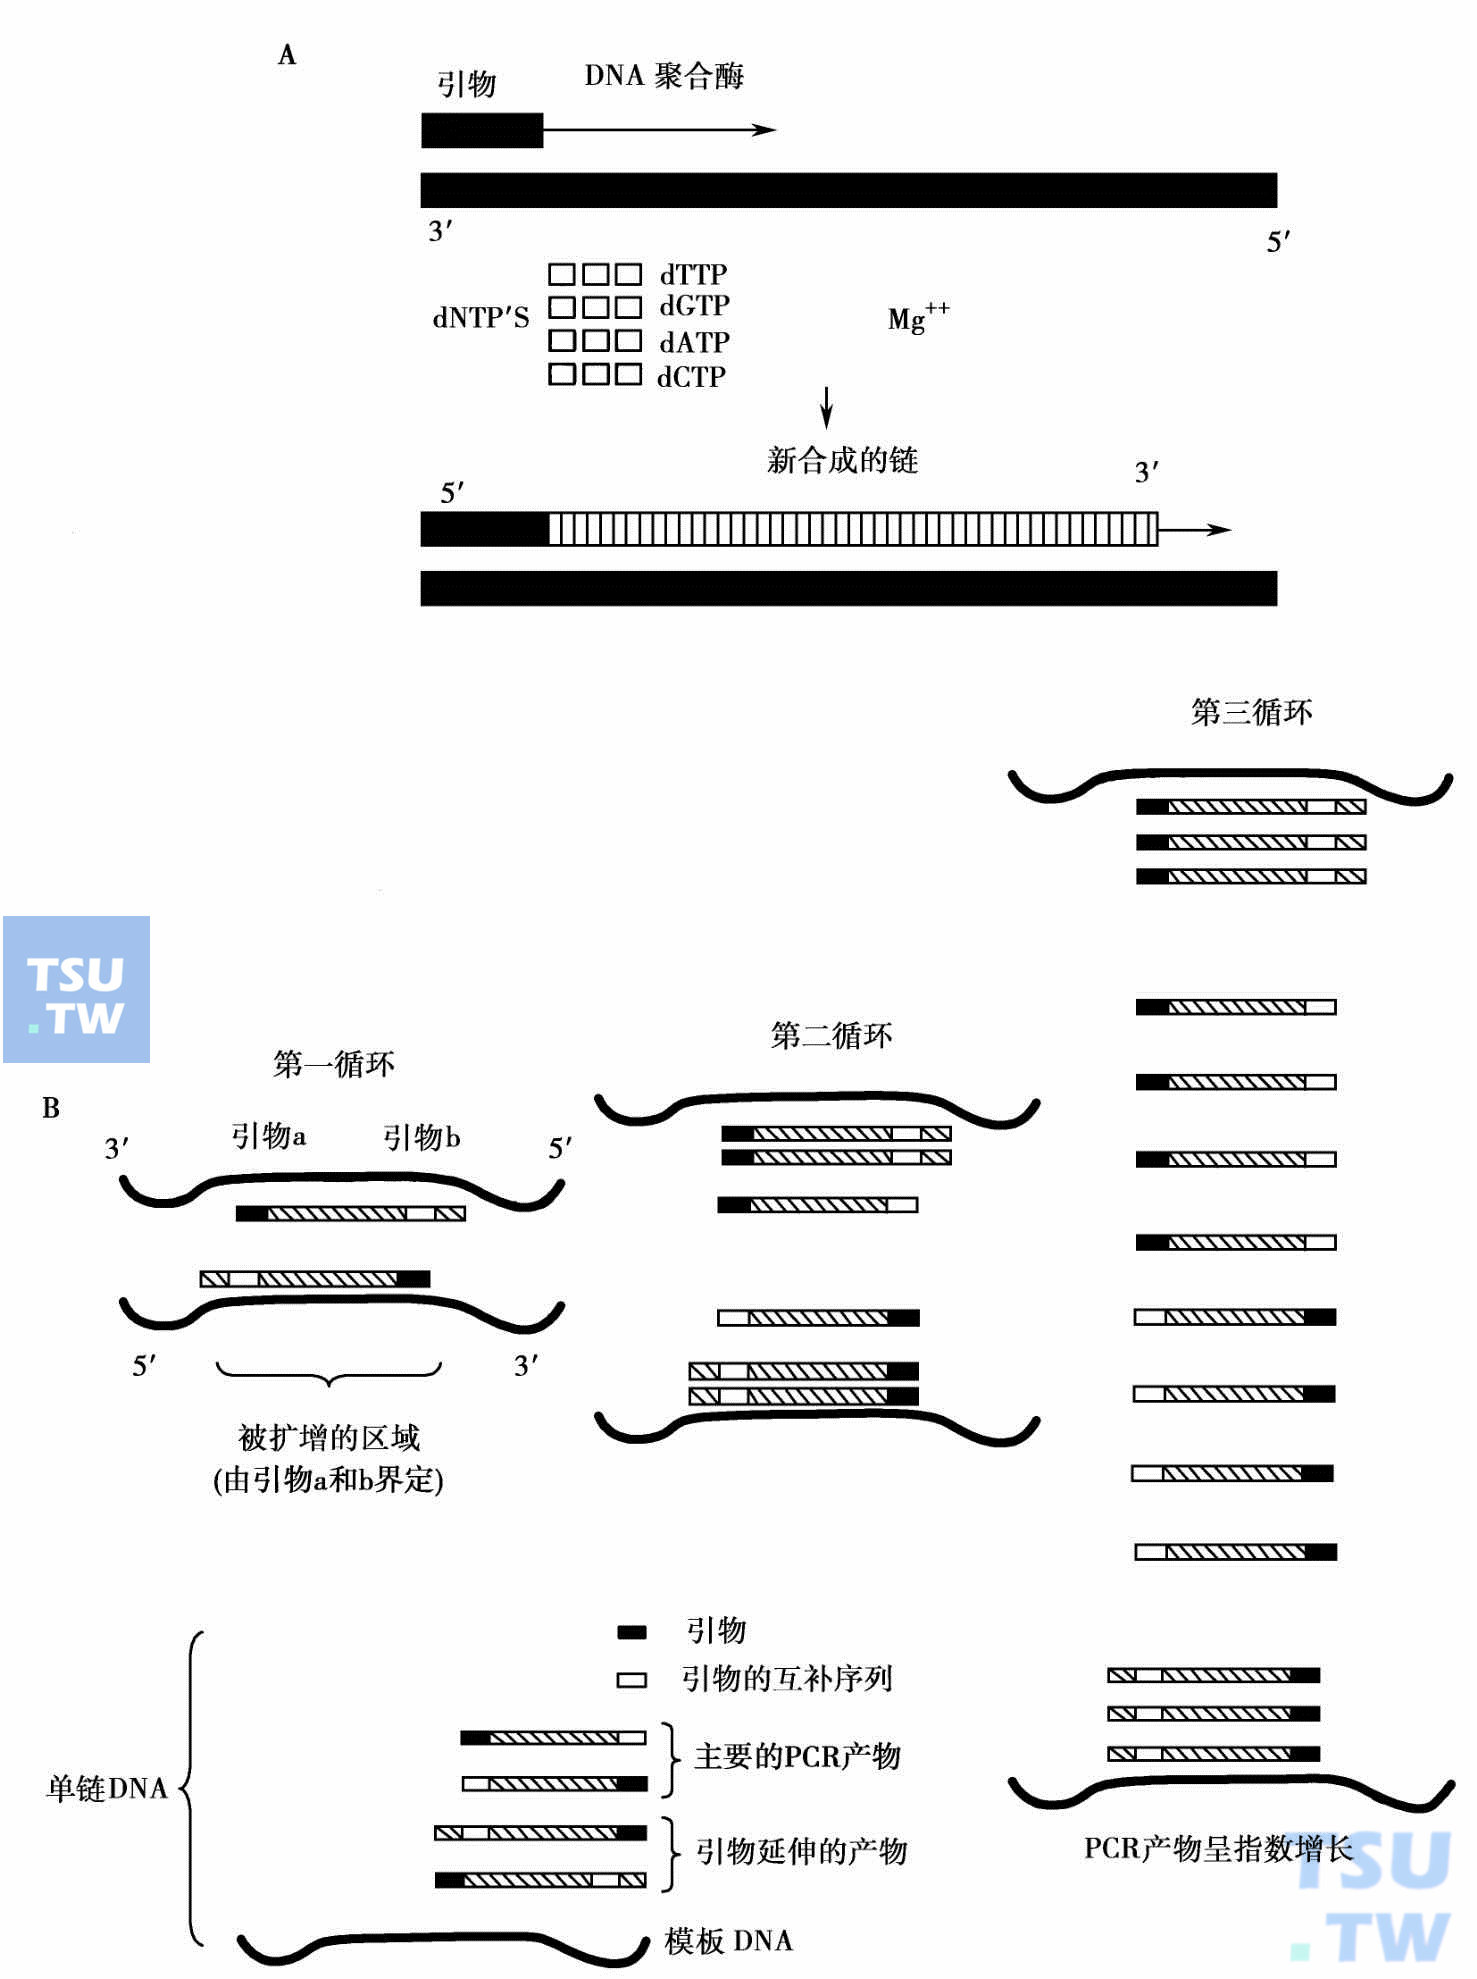  PCR扩增原理：A. DNA聚合酶以互补链为模板延伸引物；B. PCR扩增示意图